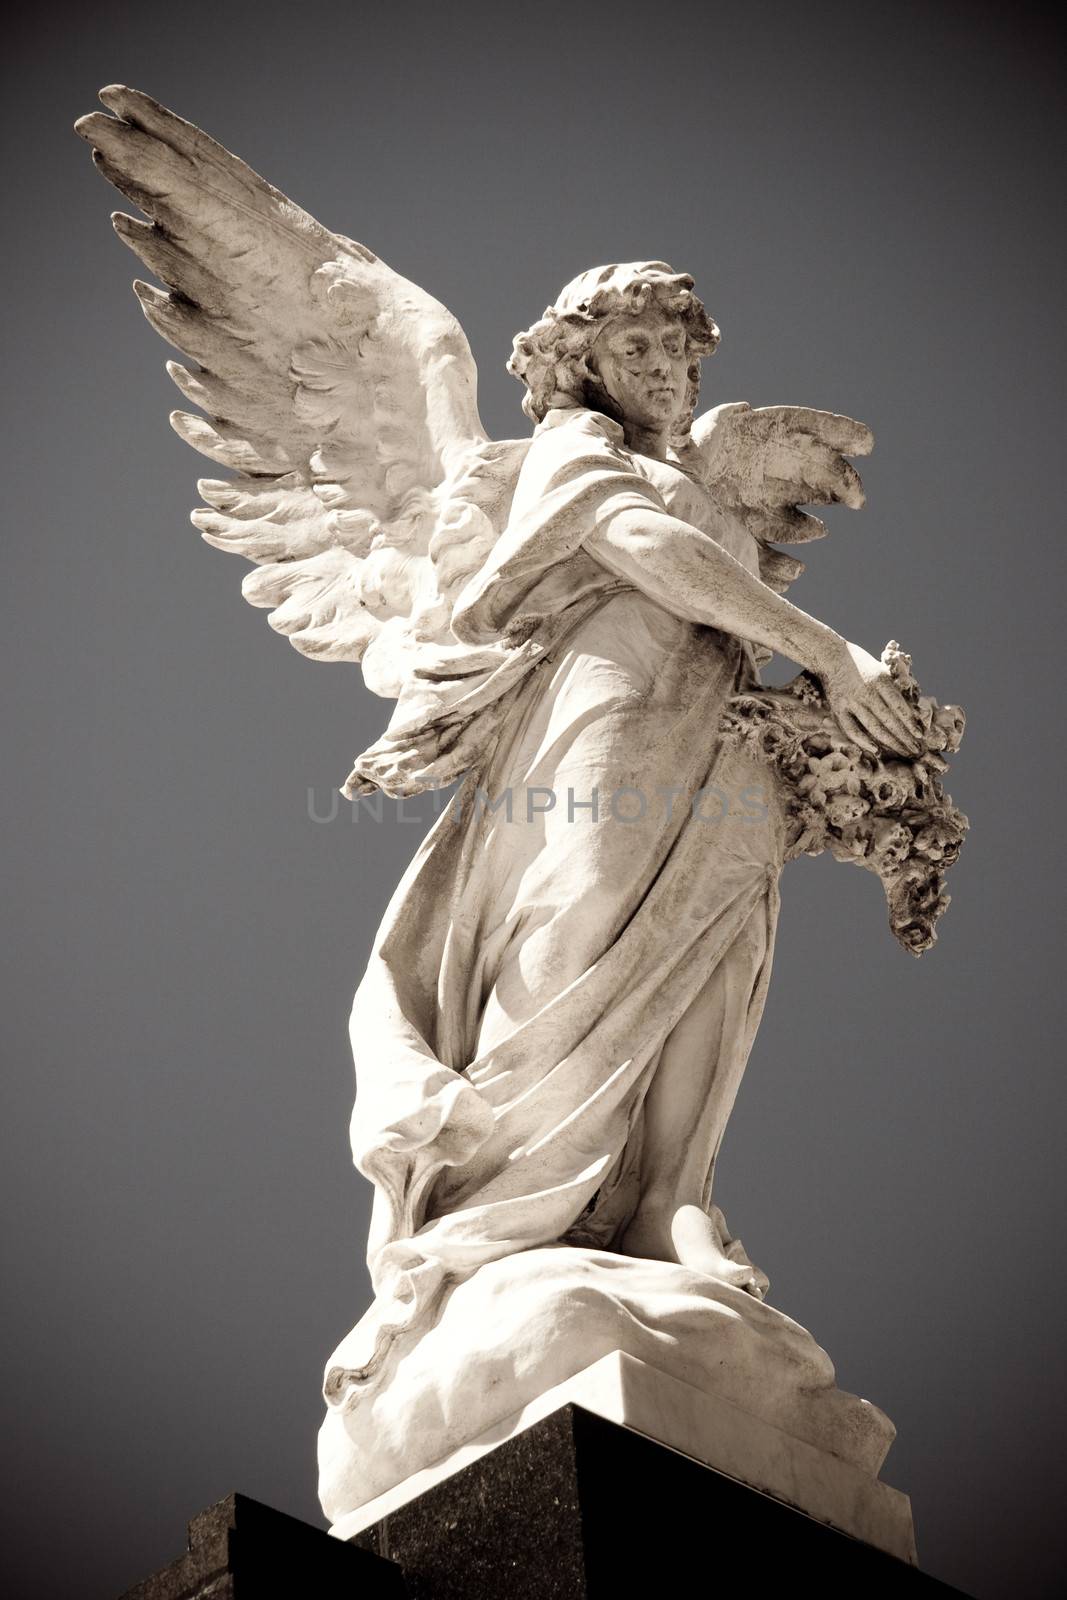 Statue of an Angel in the Cementerio de La Recoleta, Recoleta, Buenos Aires, Argentina